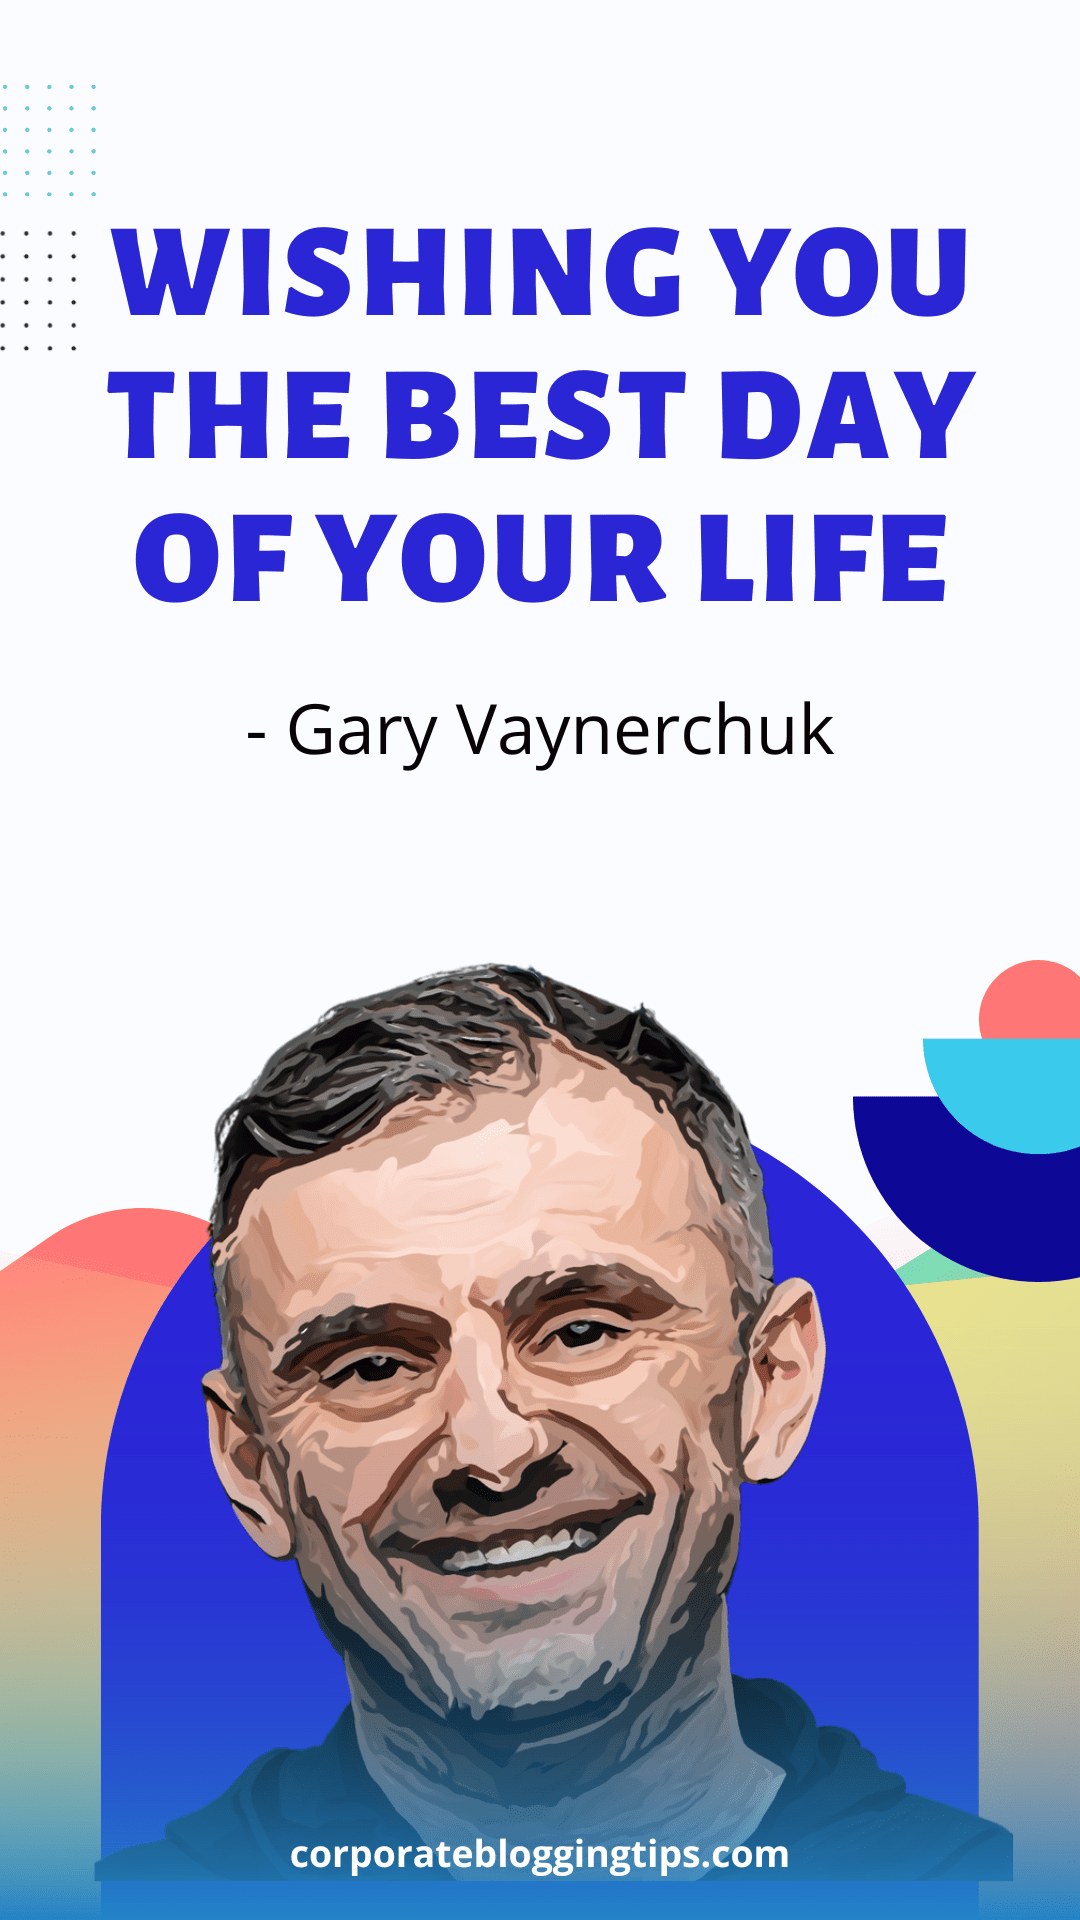 Gary Vaynerchuk quotes for life